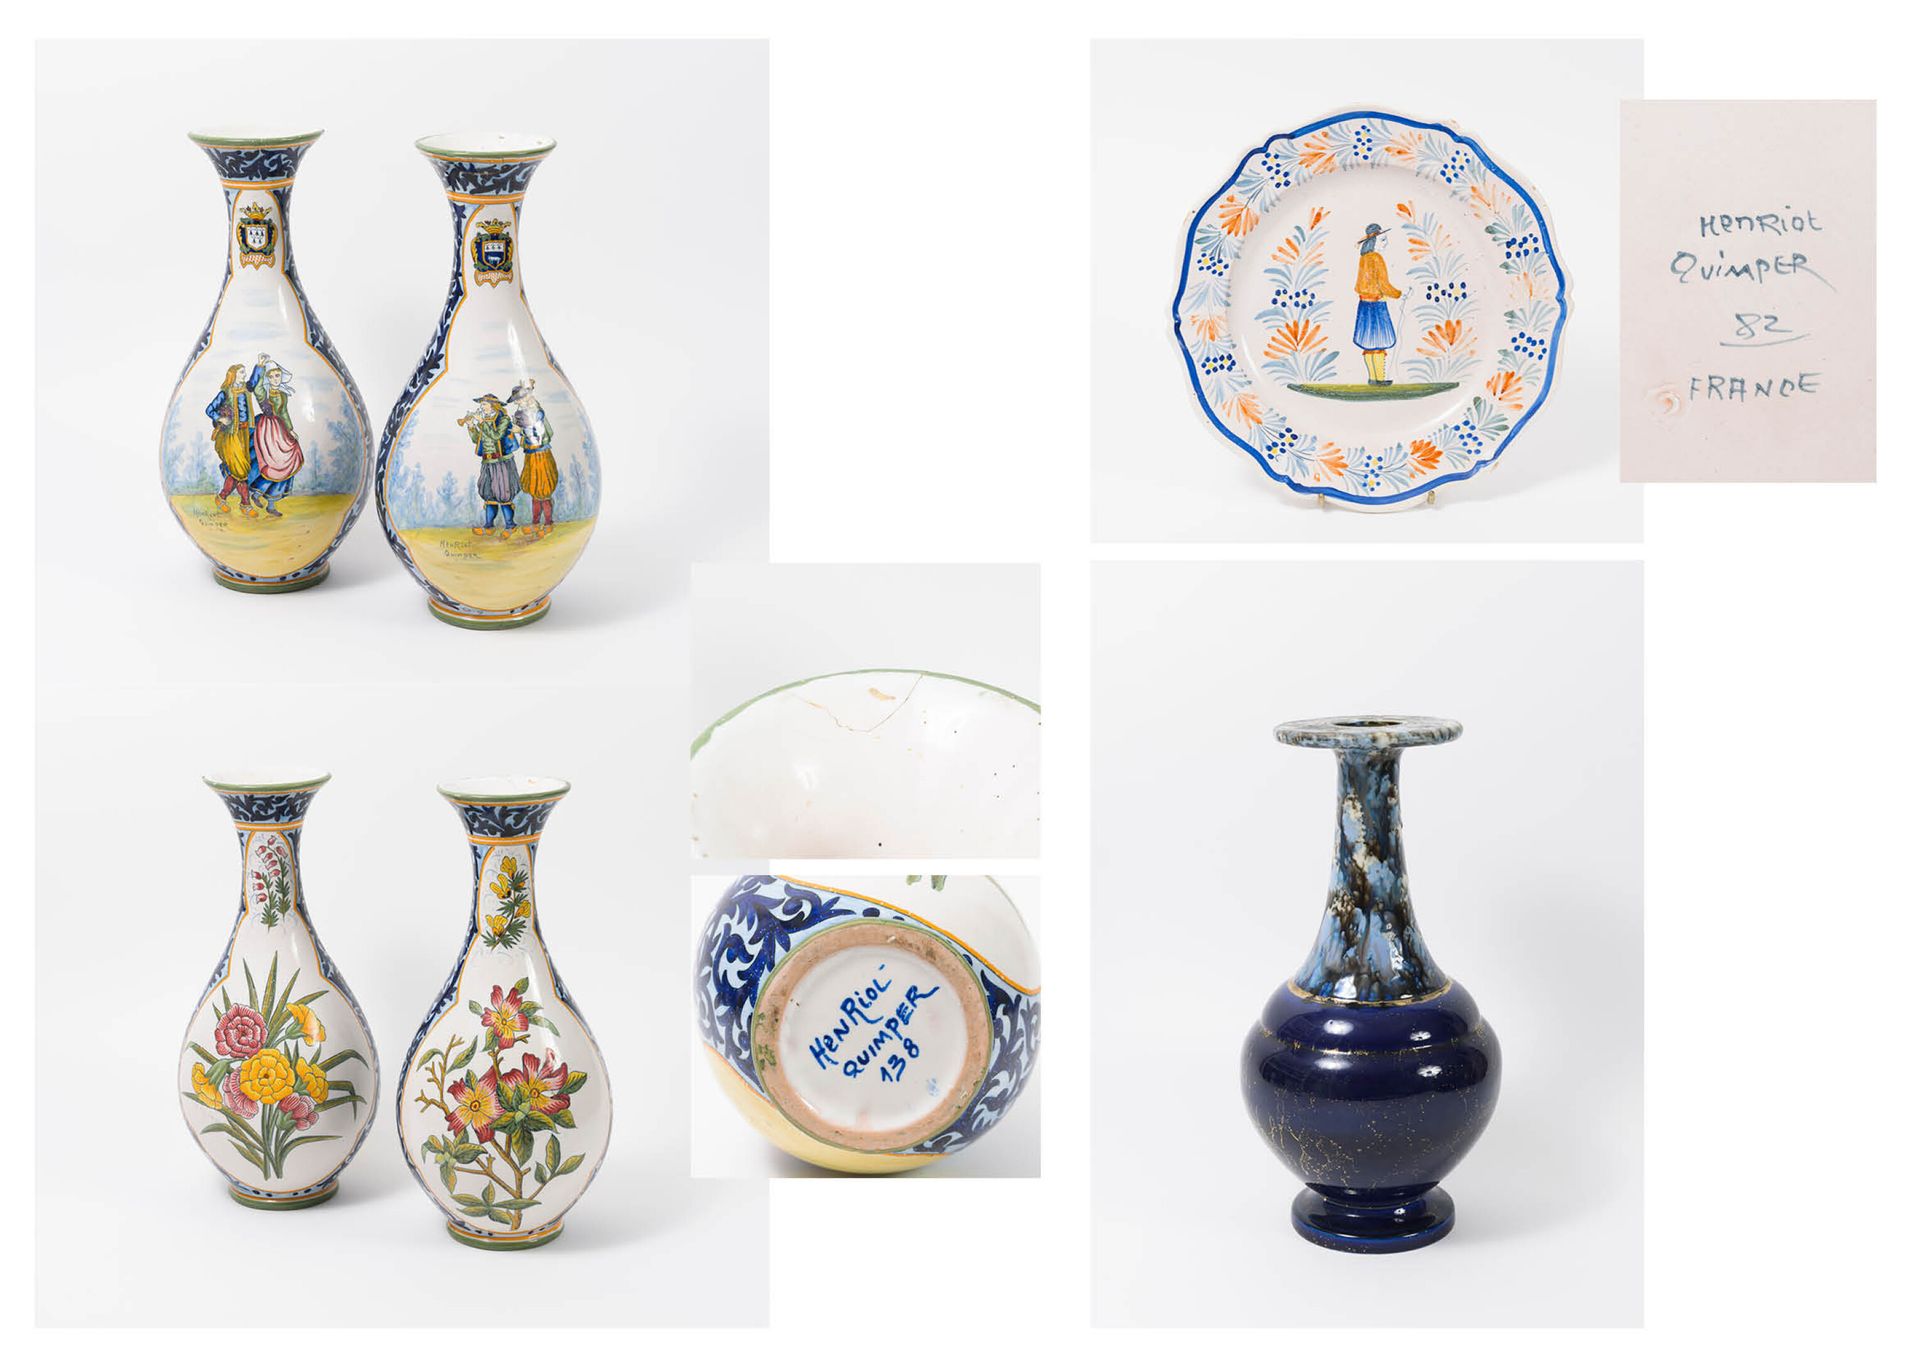 Lot comprenant : Manufacture Henriot, Quimper:

- Pair of glazed earthenware vas&hellip;